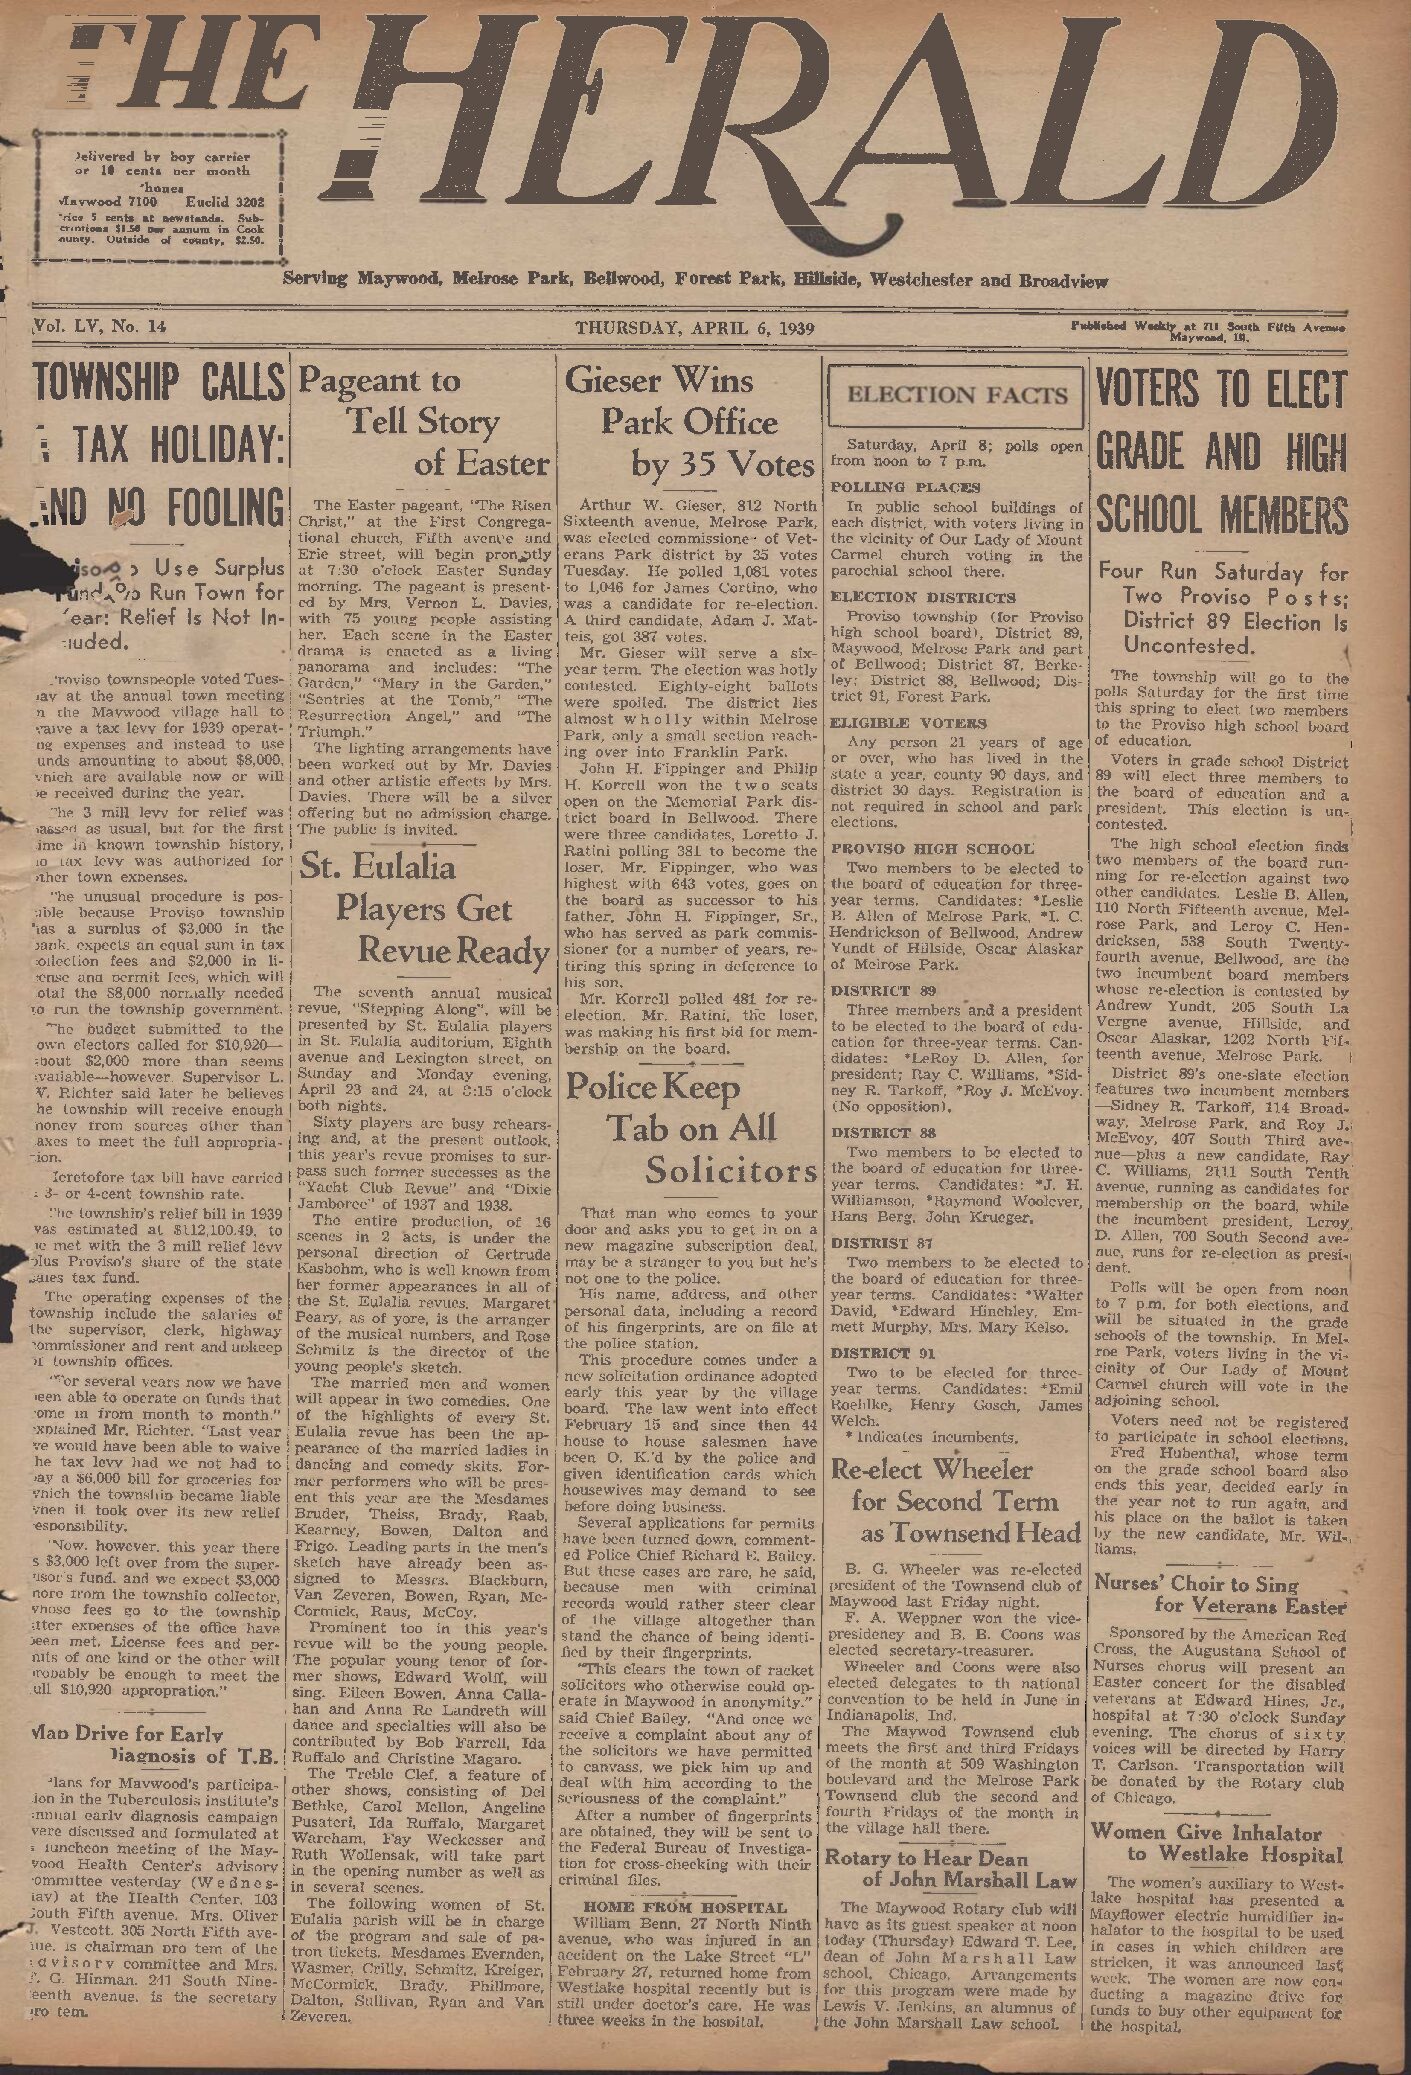 The Herald – 19390406